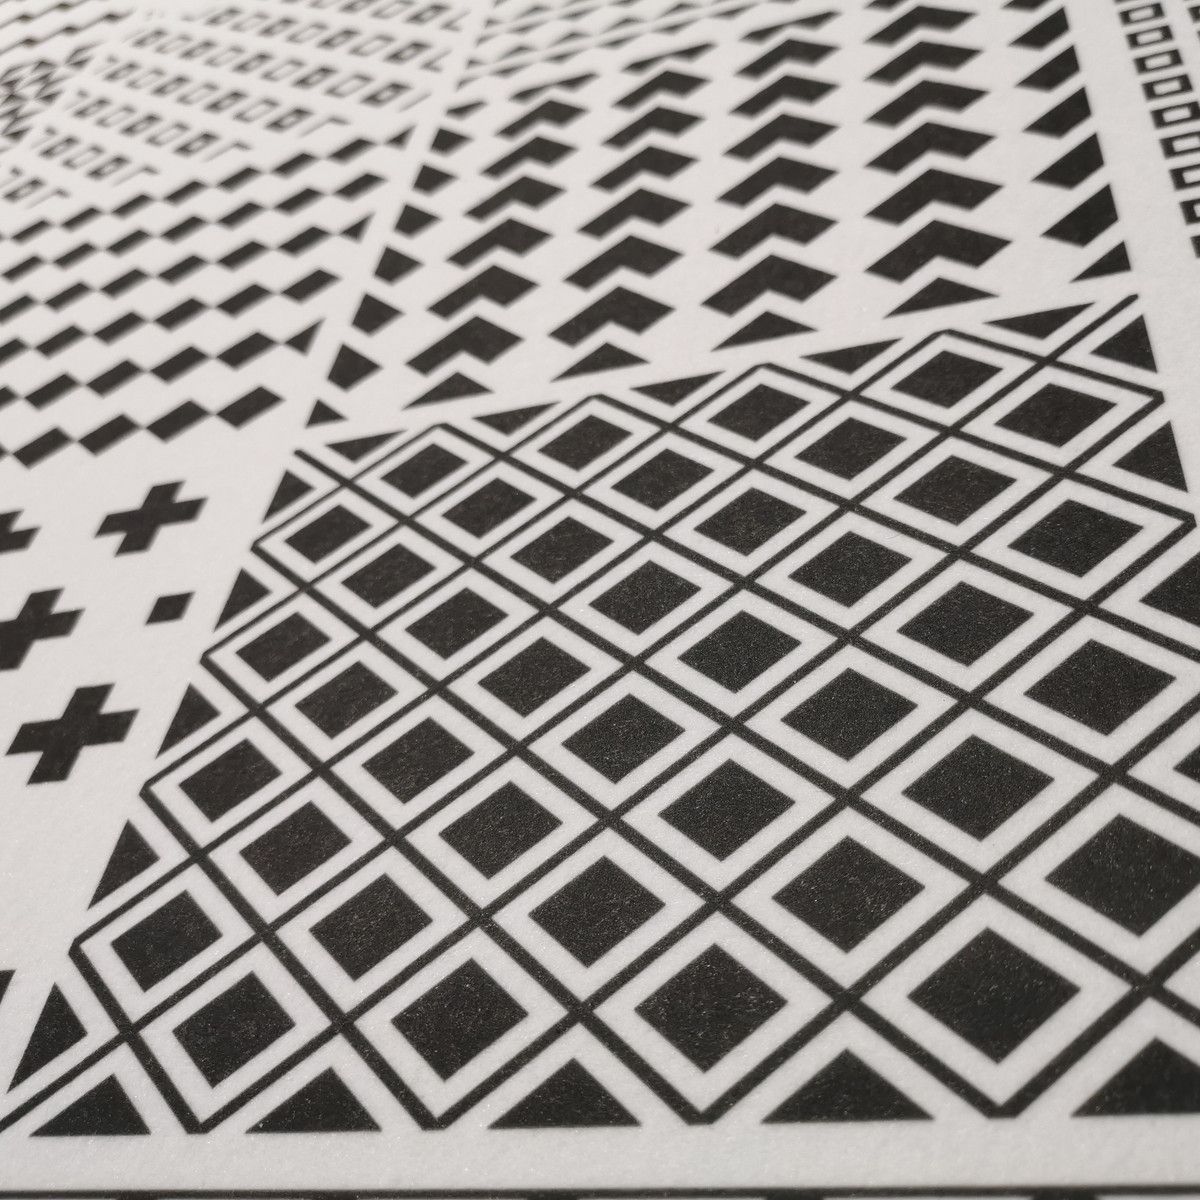 Printed Polycolour Black and White Tile Printing.jpg